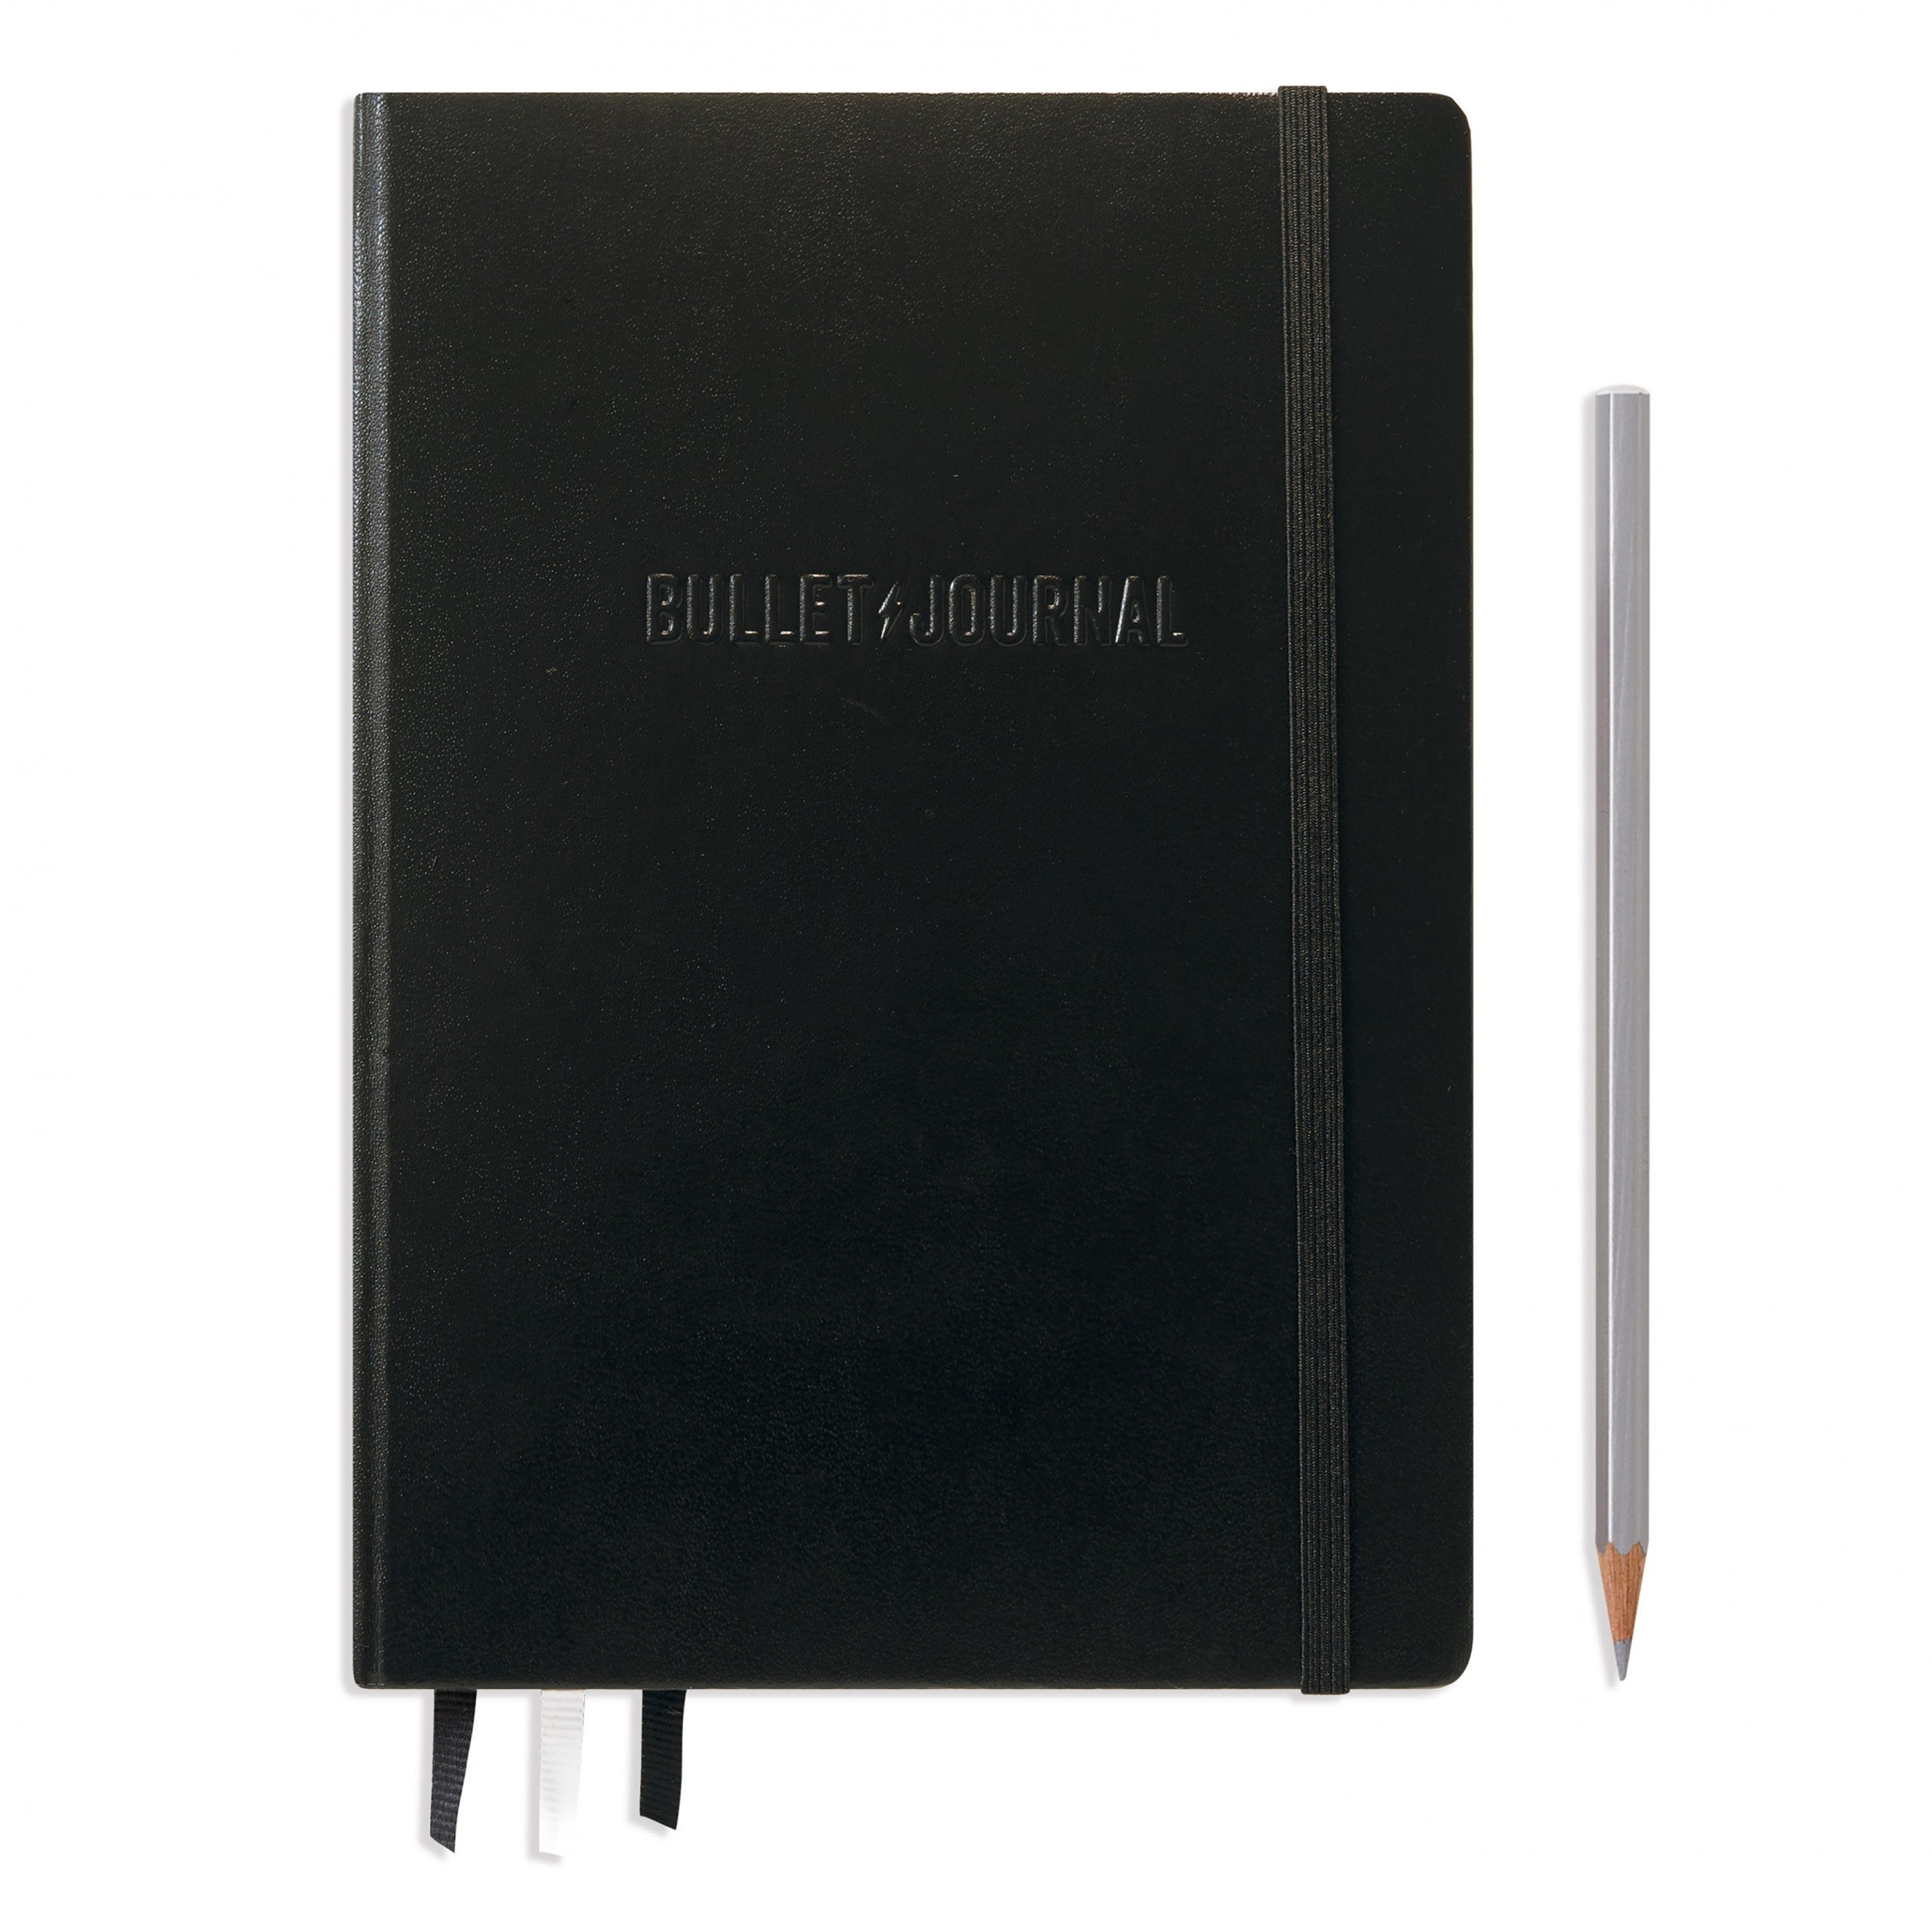 Leuchtturm1917 Bullet Journal Edition 2 Medium (A5) Black - Pencraft the boutique